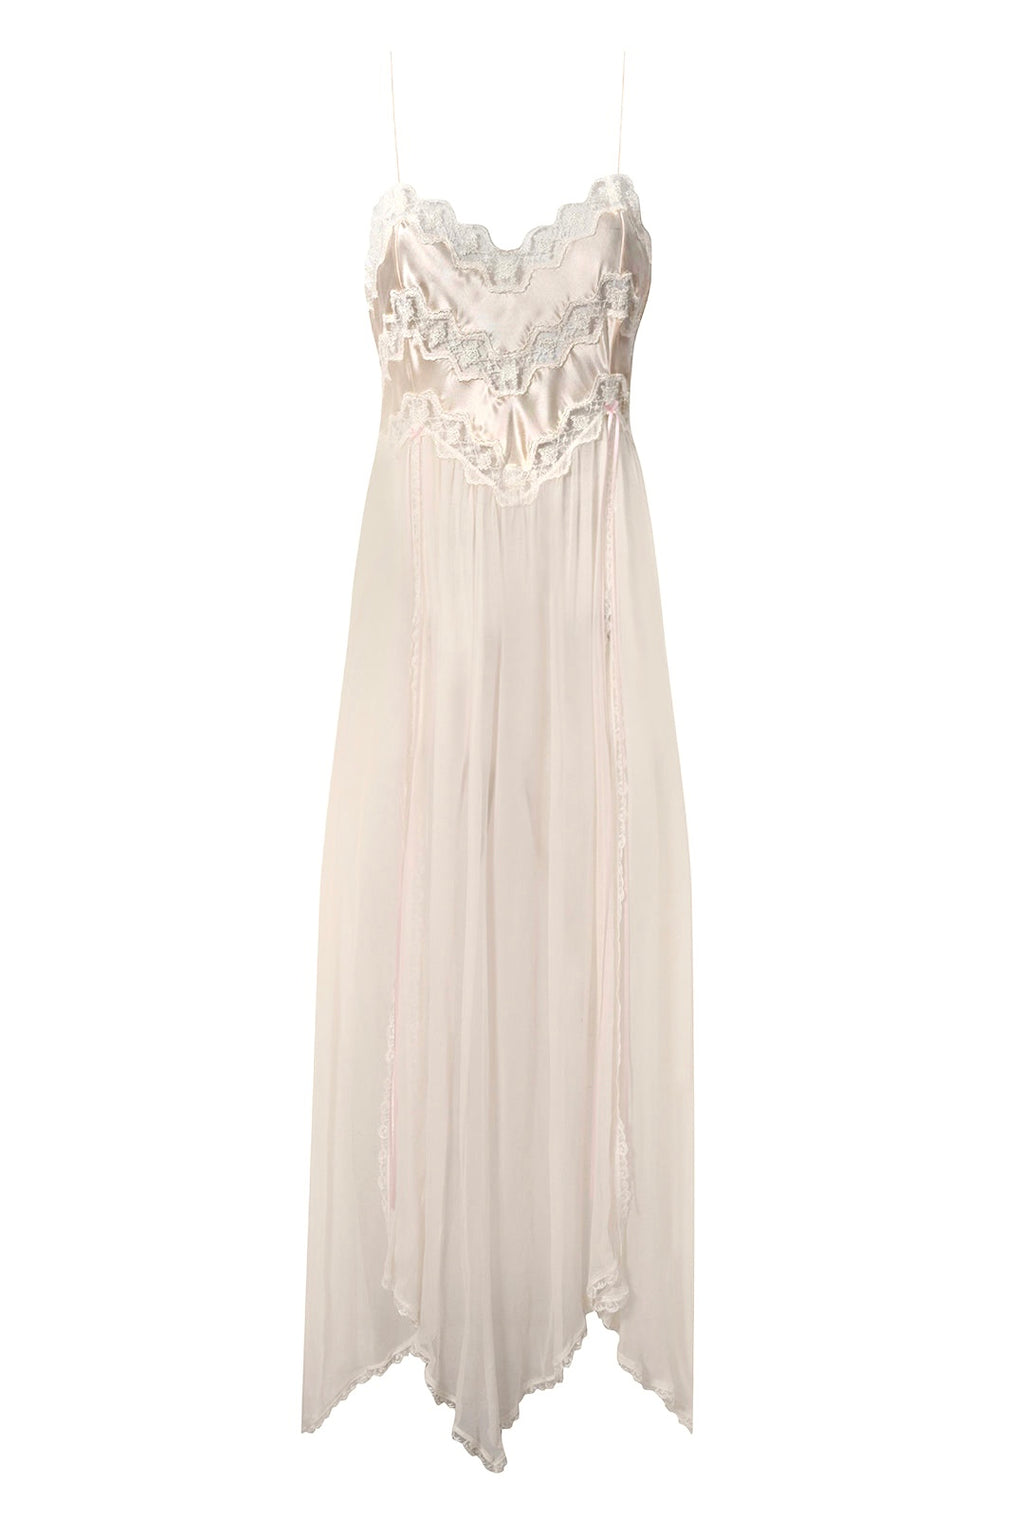 1940's White Lace Slip Dress